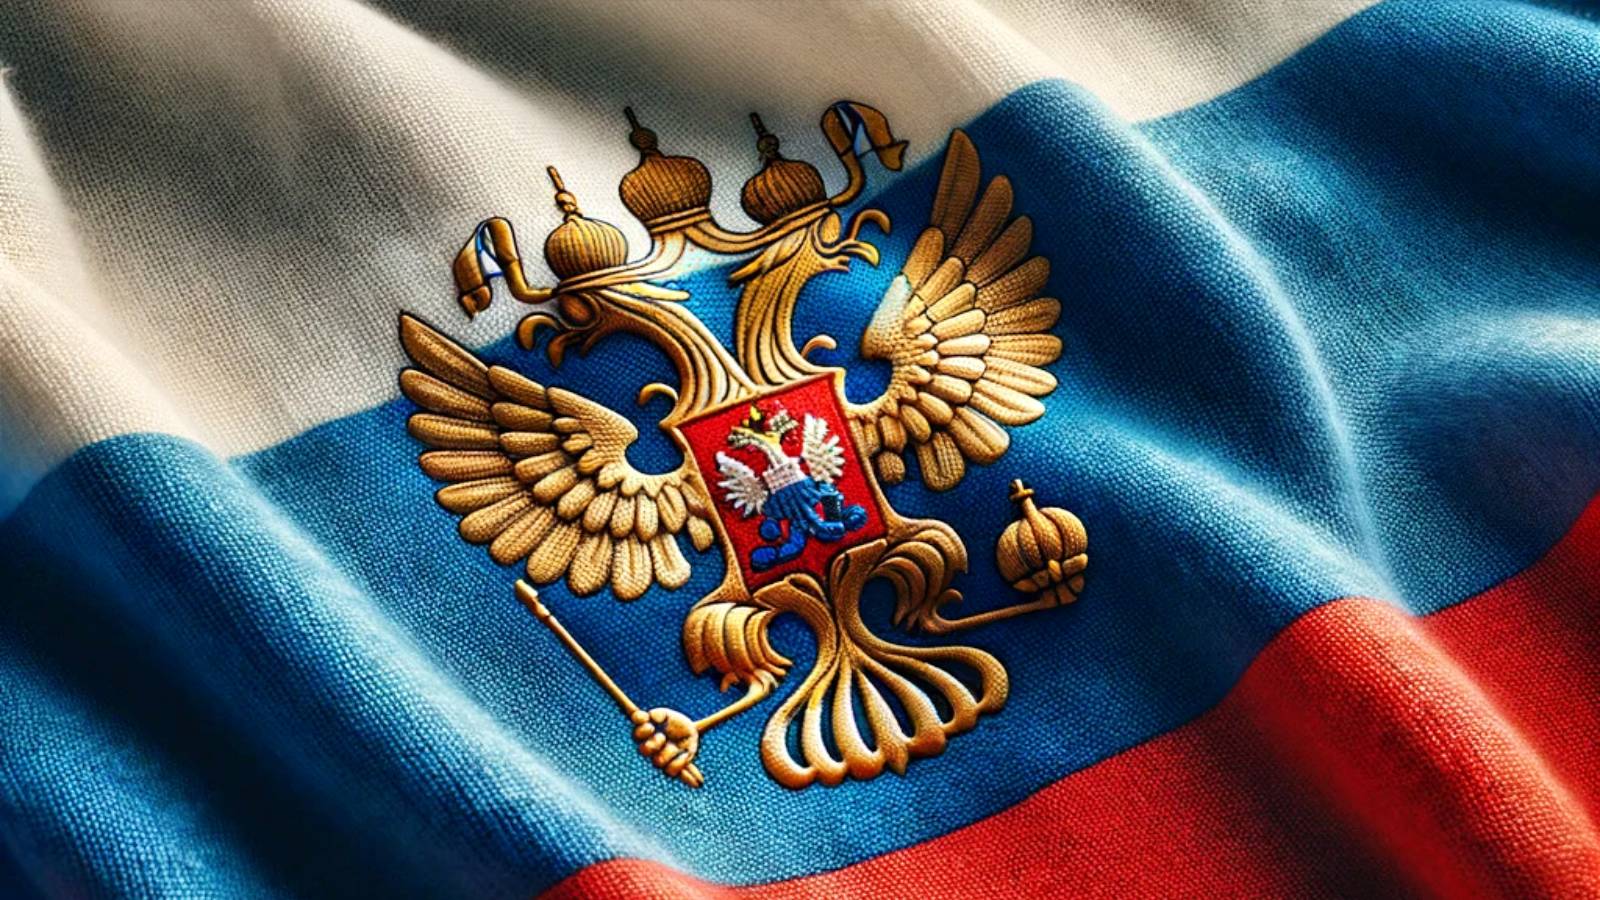 Rusia Continua sa Avanseze in Ucraina, pe Masura ce Ajutorul Occidental Intareste Armata Ucraineana